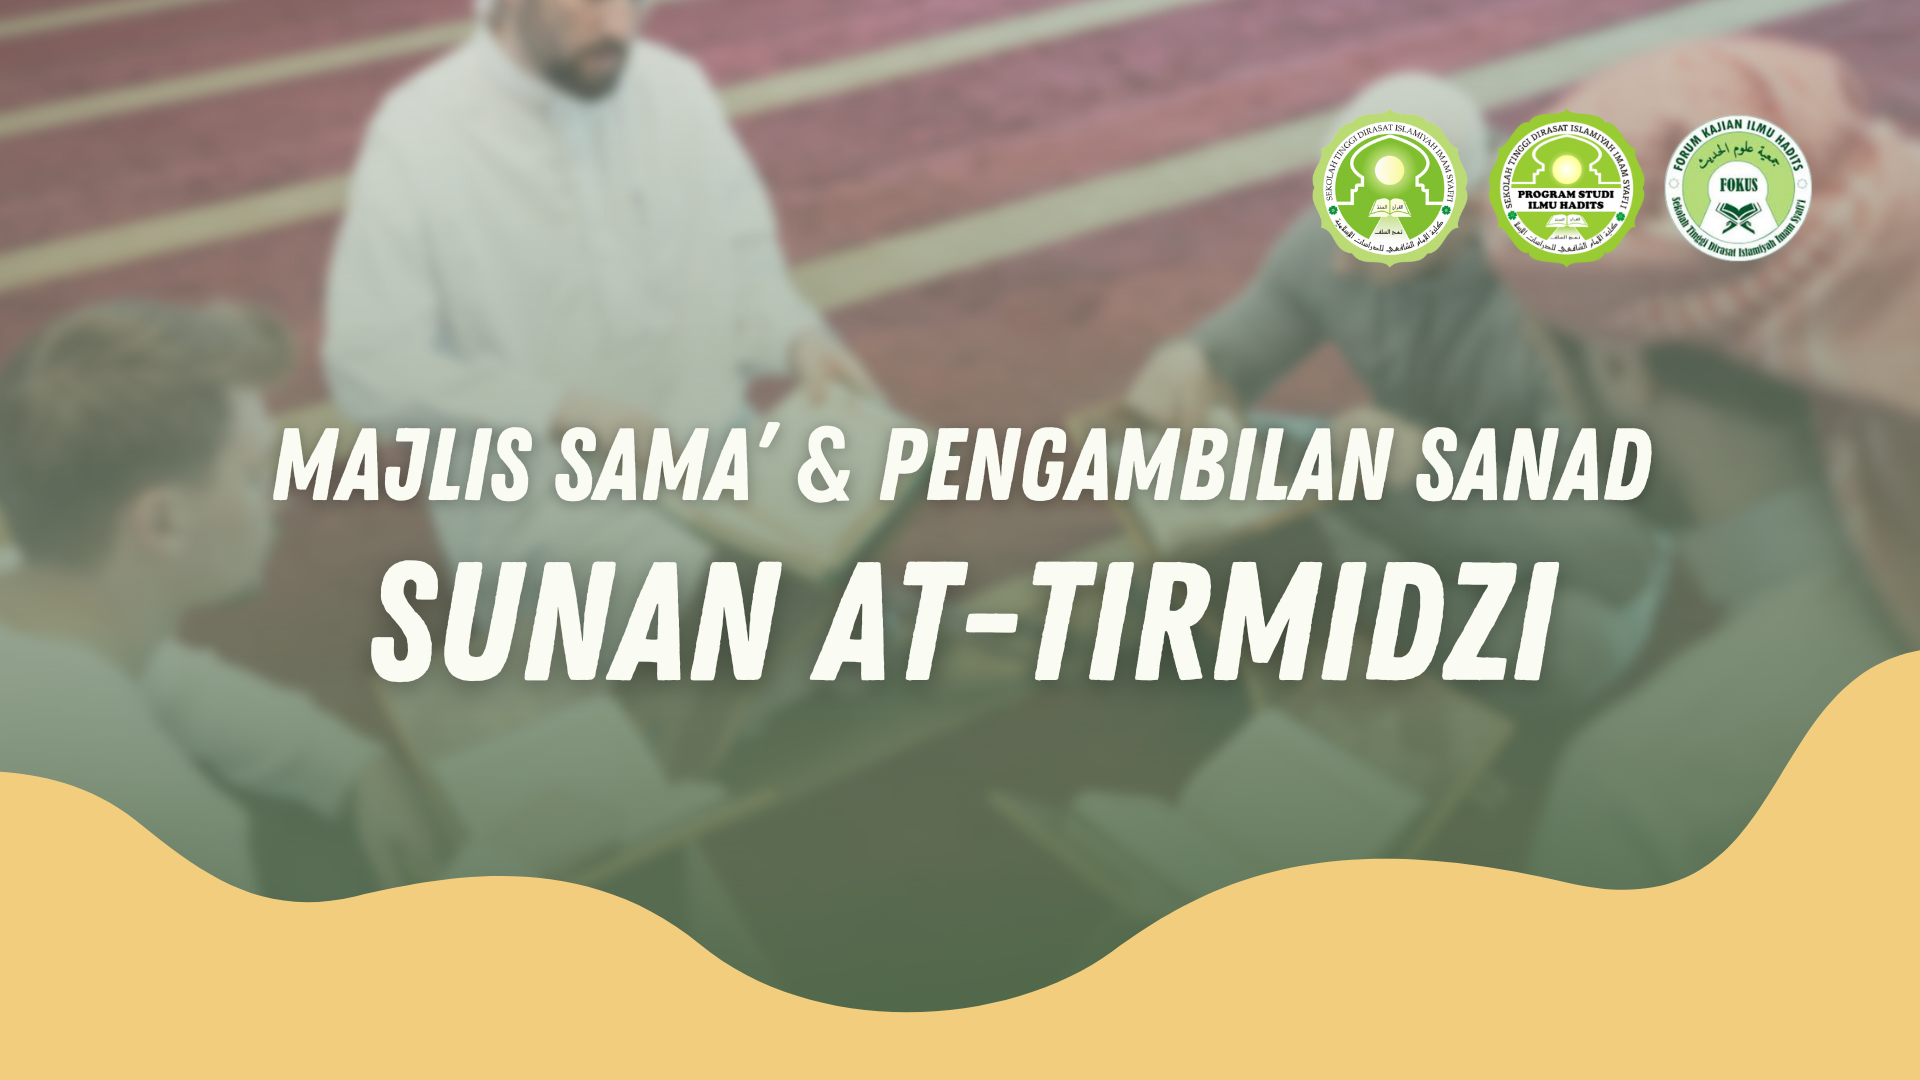 You are currently viewing Majelis Sama’ & Pengambilan Sanad Sunan At-Tirmidzi